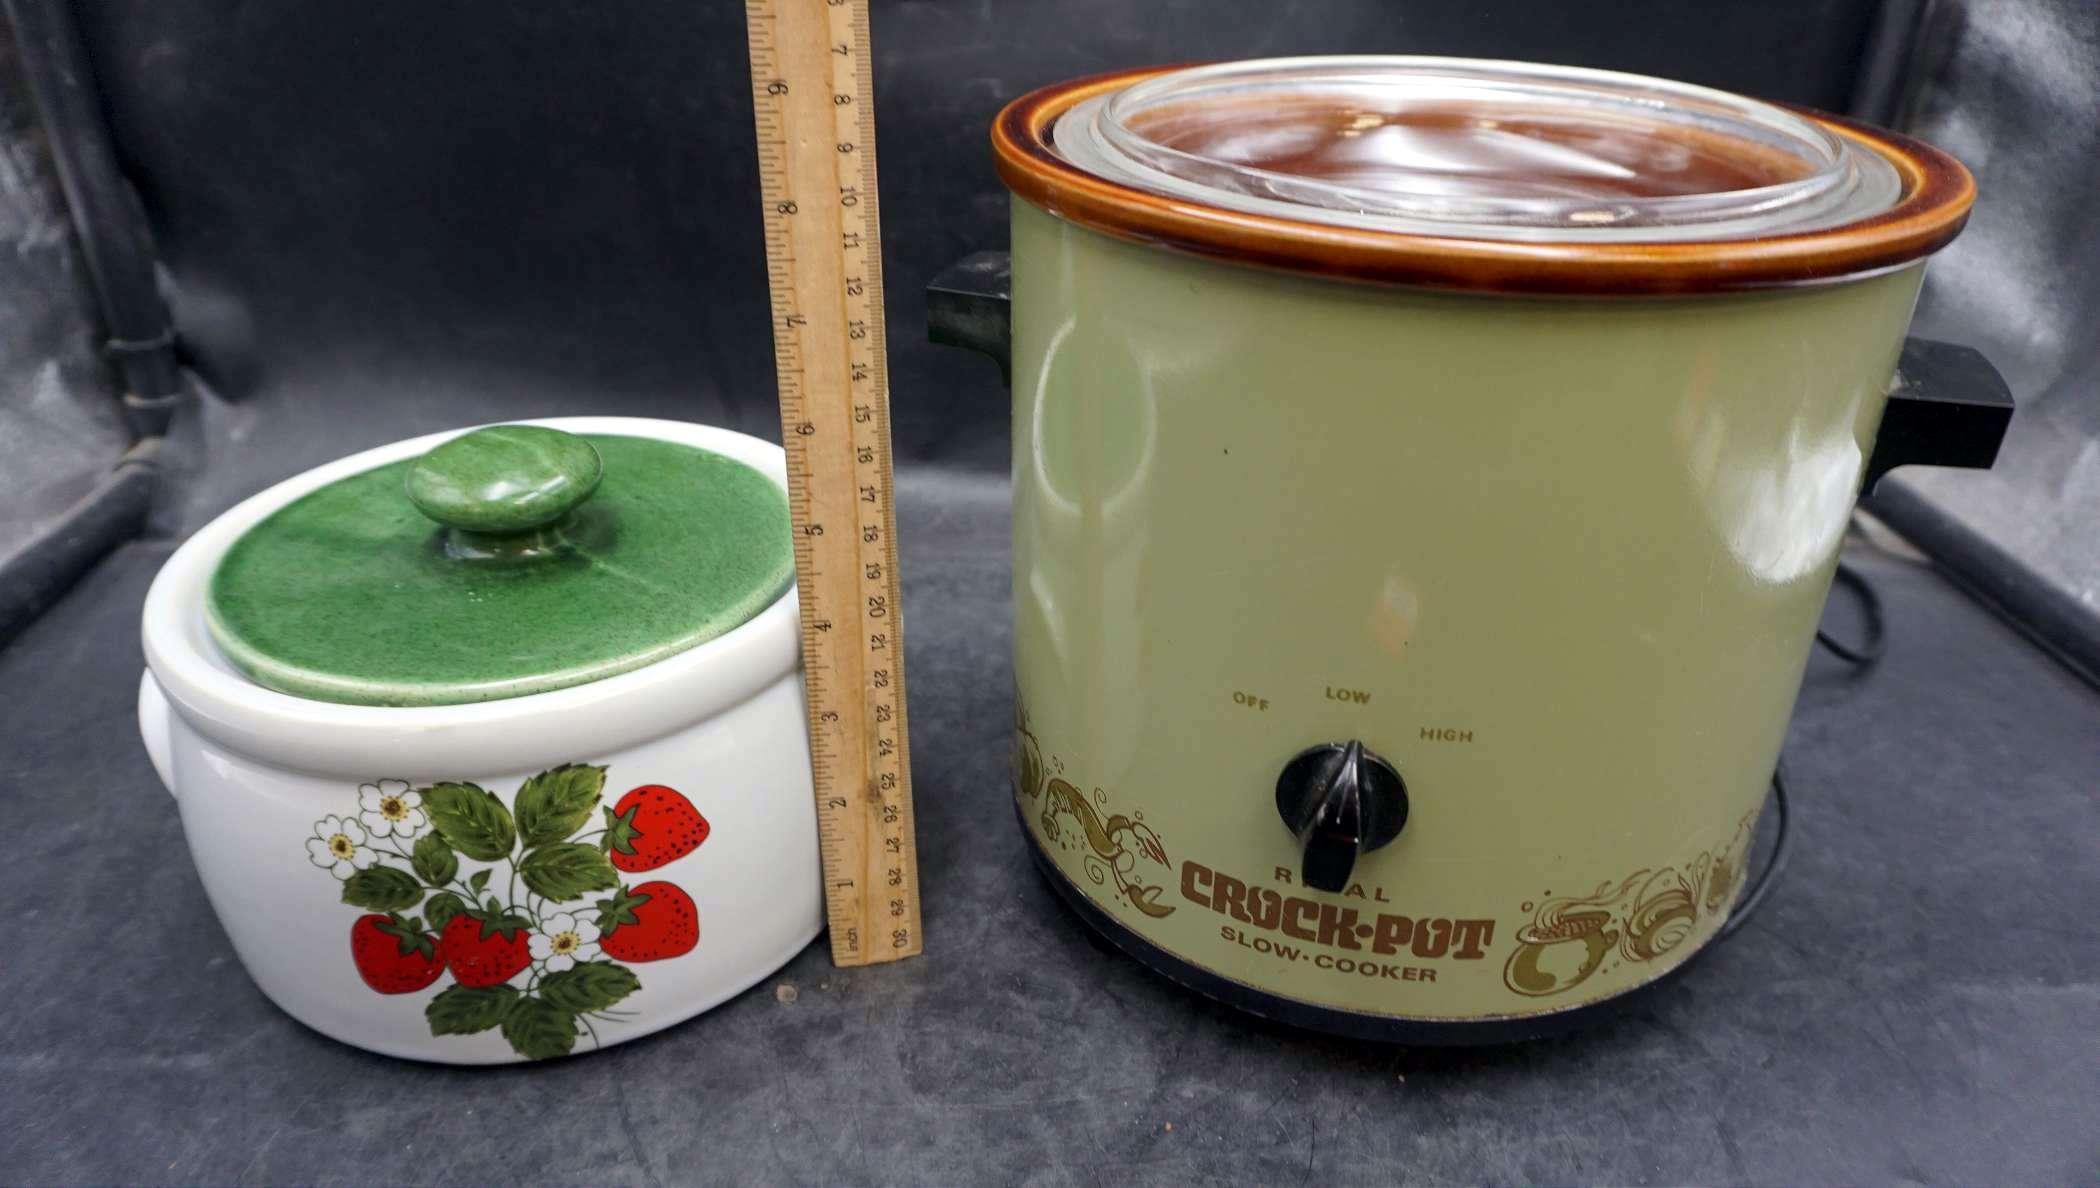 Rival Crock-Pot Slow-Cooker & Strawberry Cookie Jar